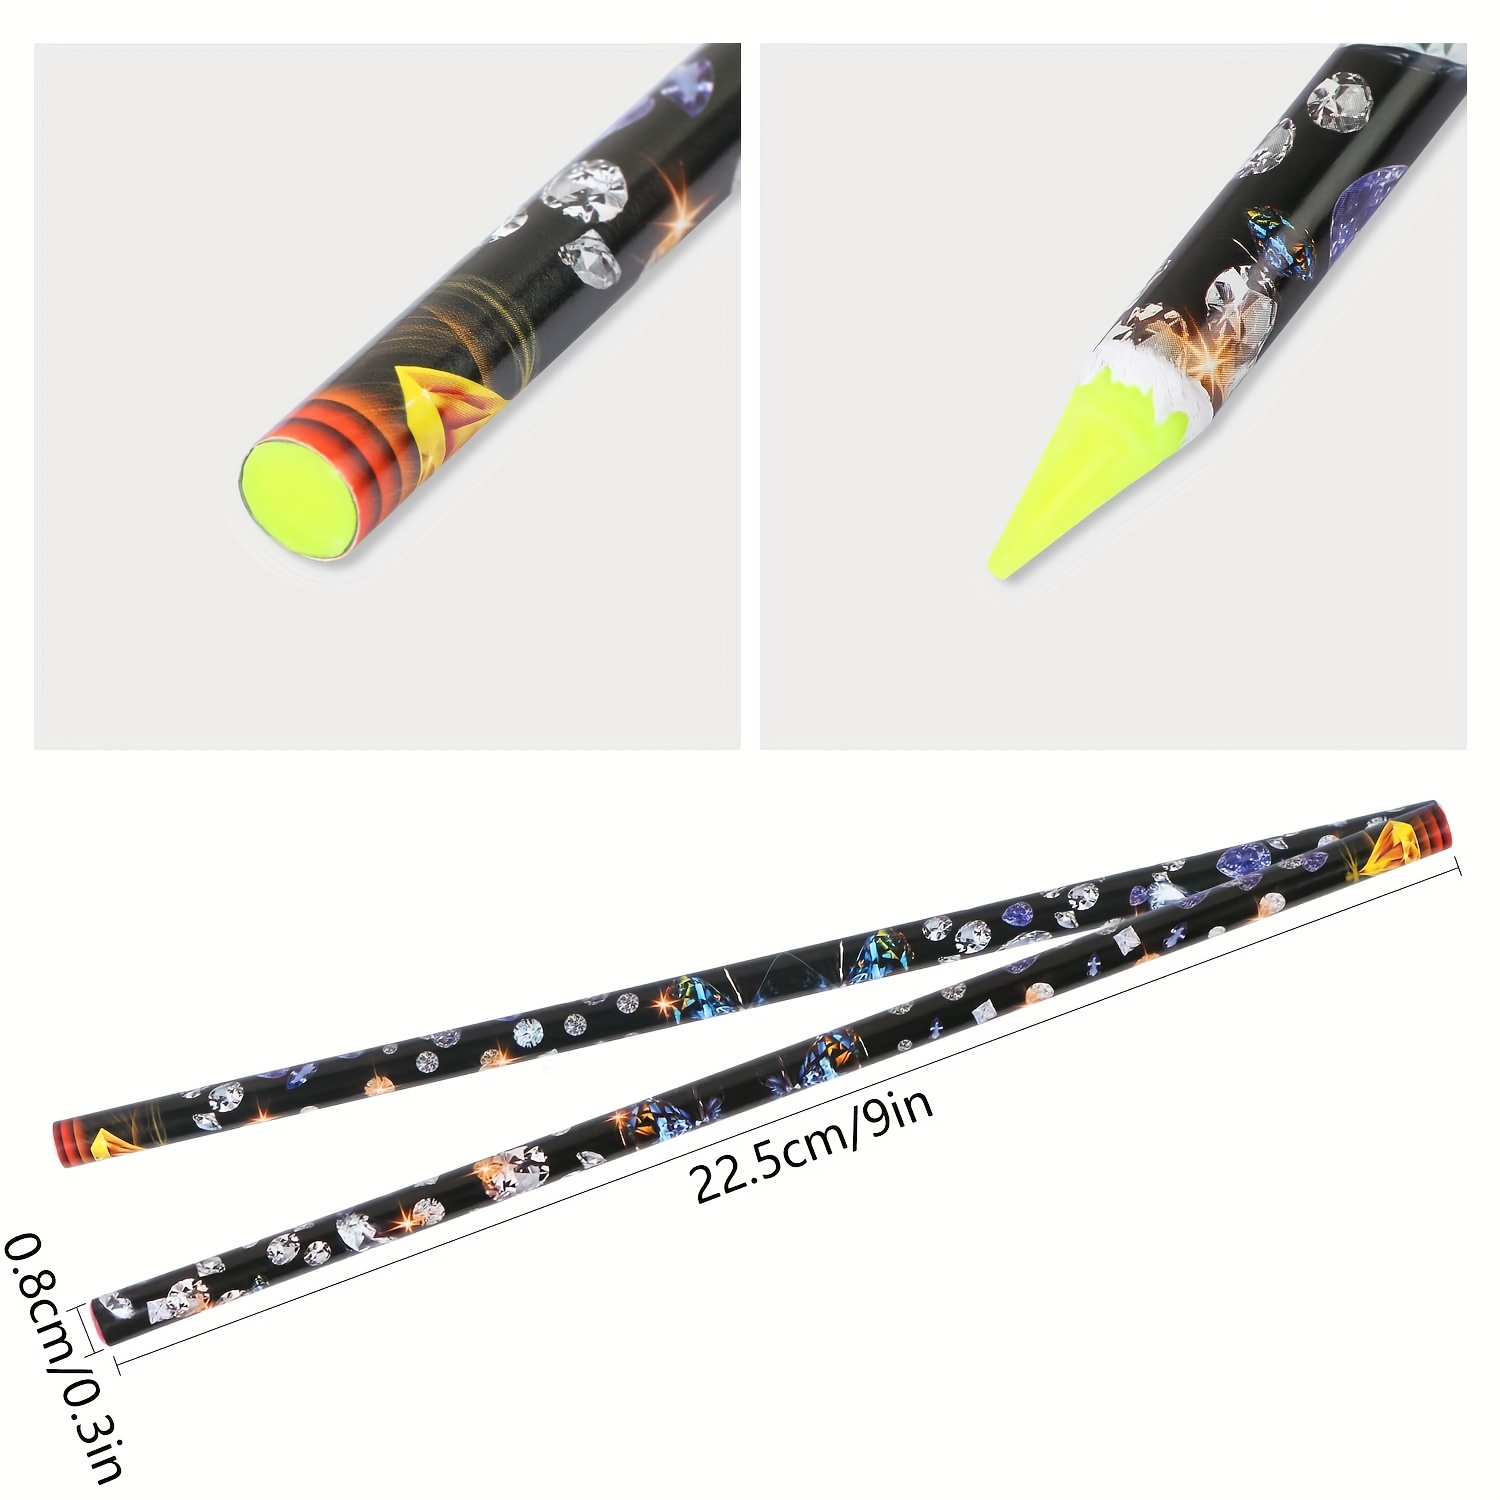 4 Pcs Wax Rhinestone Pickers Pencil Wax Pencil Set For Rhinestones Gem  Dotting Crystal Pick Up Tools Rhinestone Tool